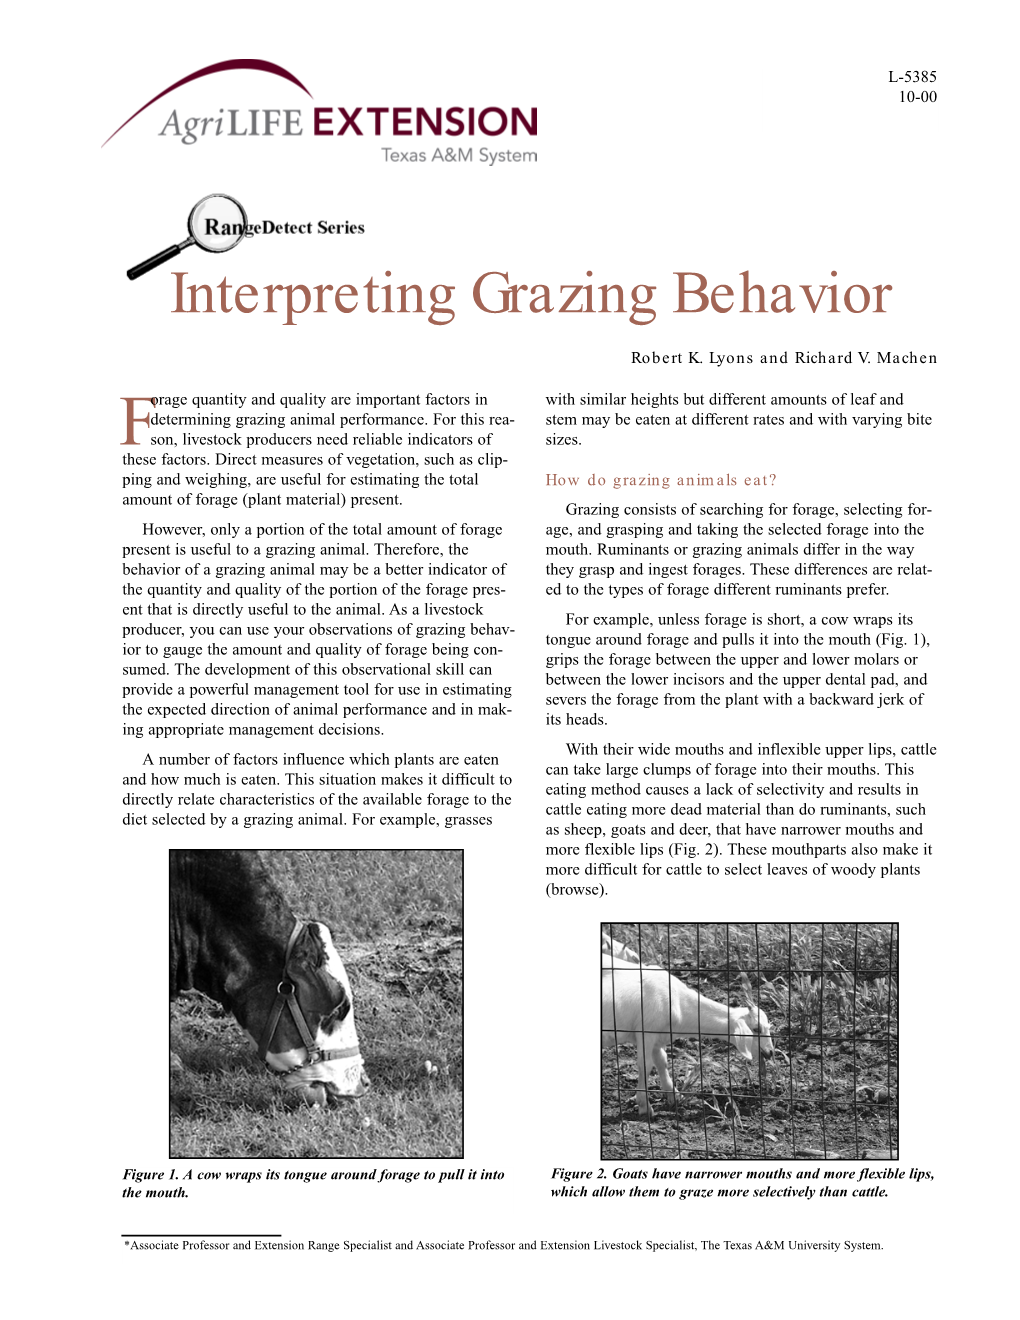 Interpreting Grazing Behavior